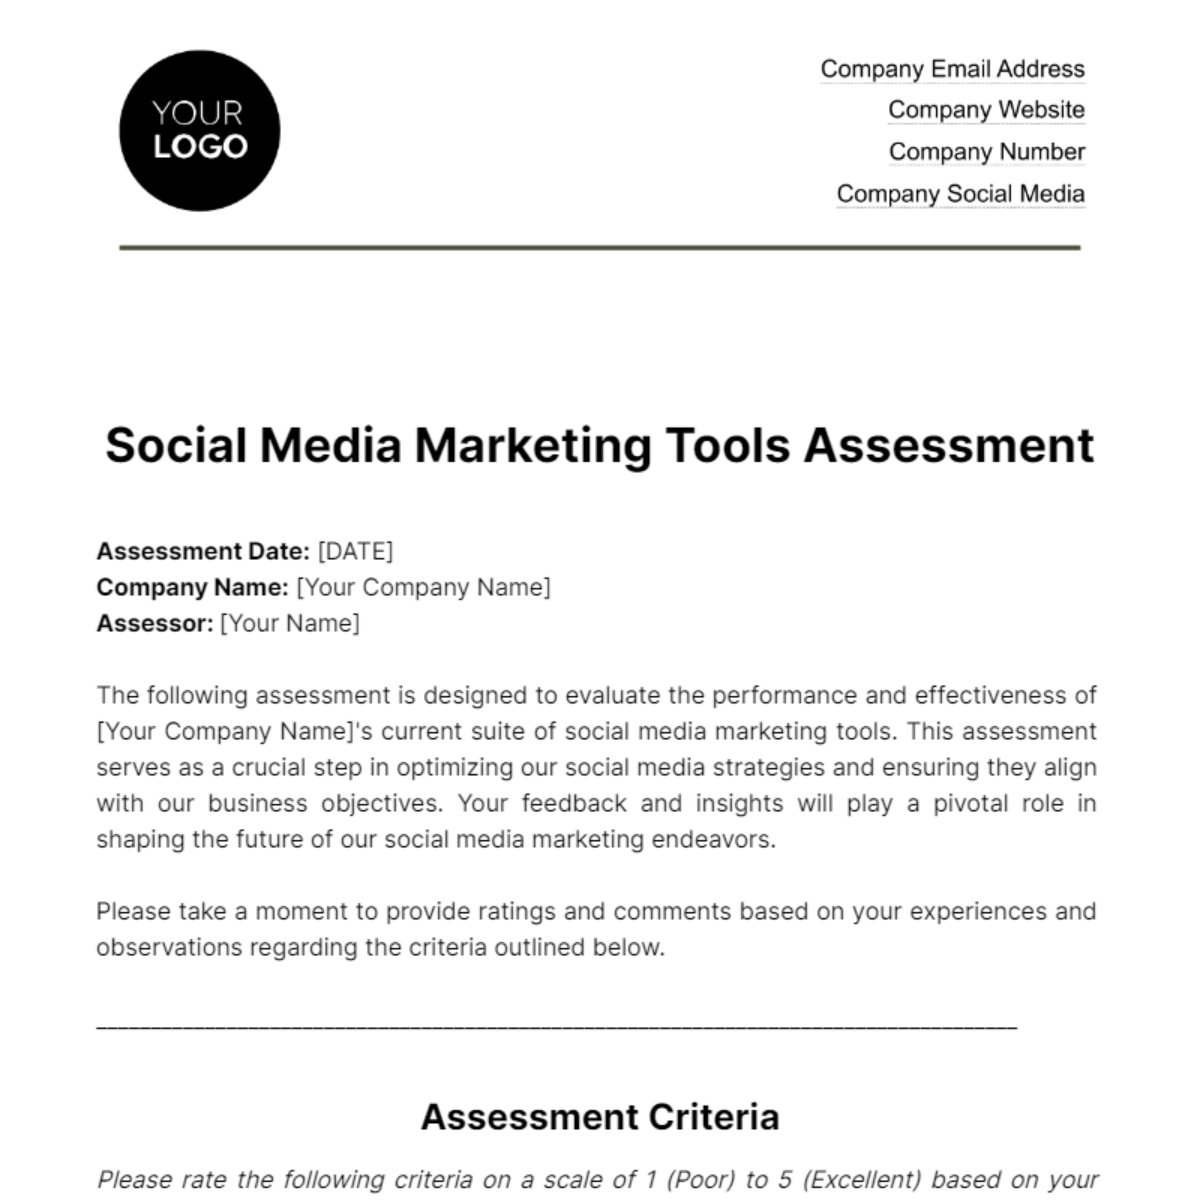 Social Media Marketing Tools Assessment Template